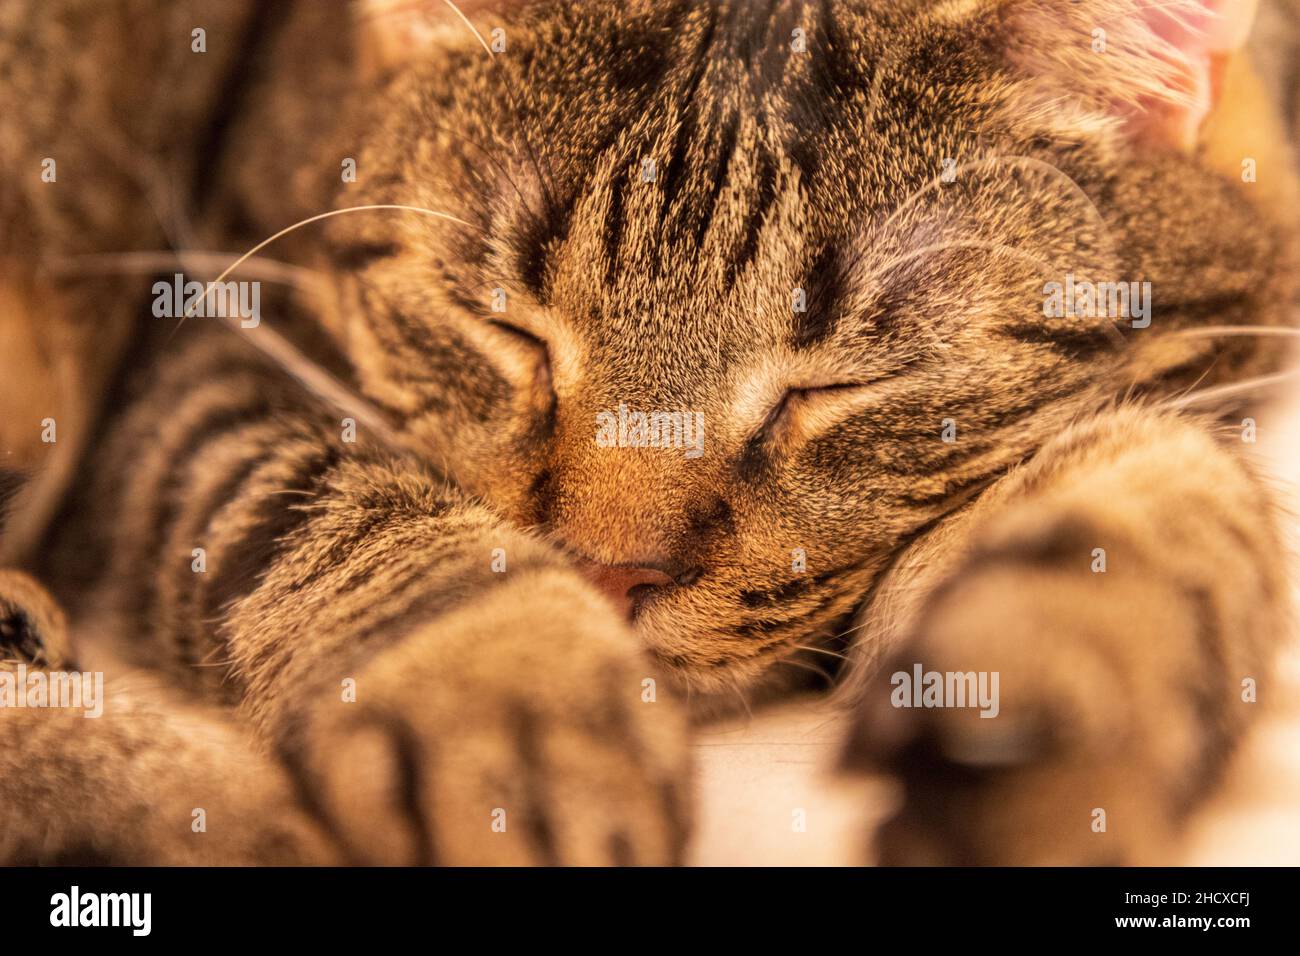 Très content de dormir chat Banque D'Images